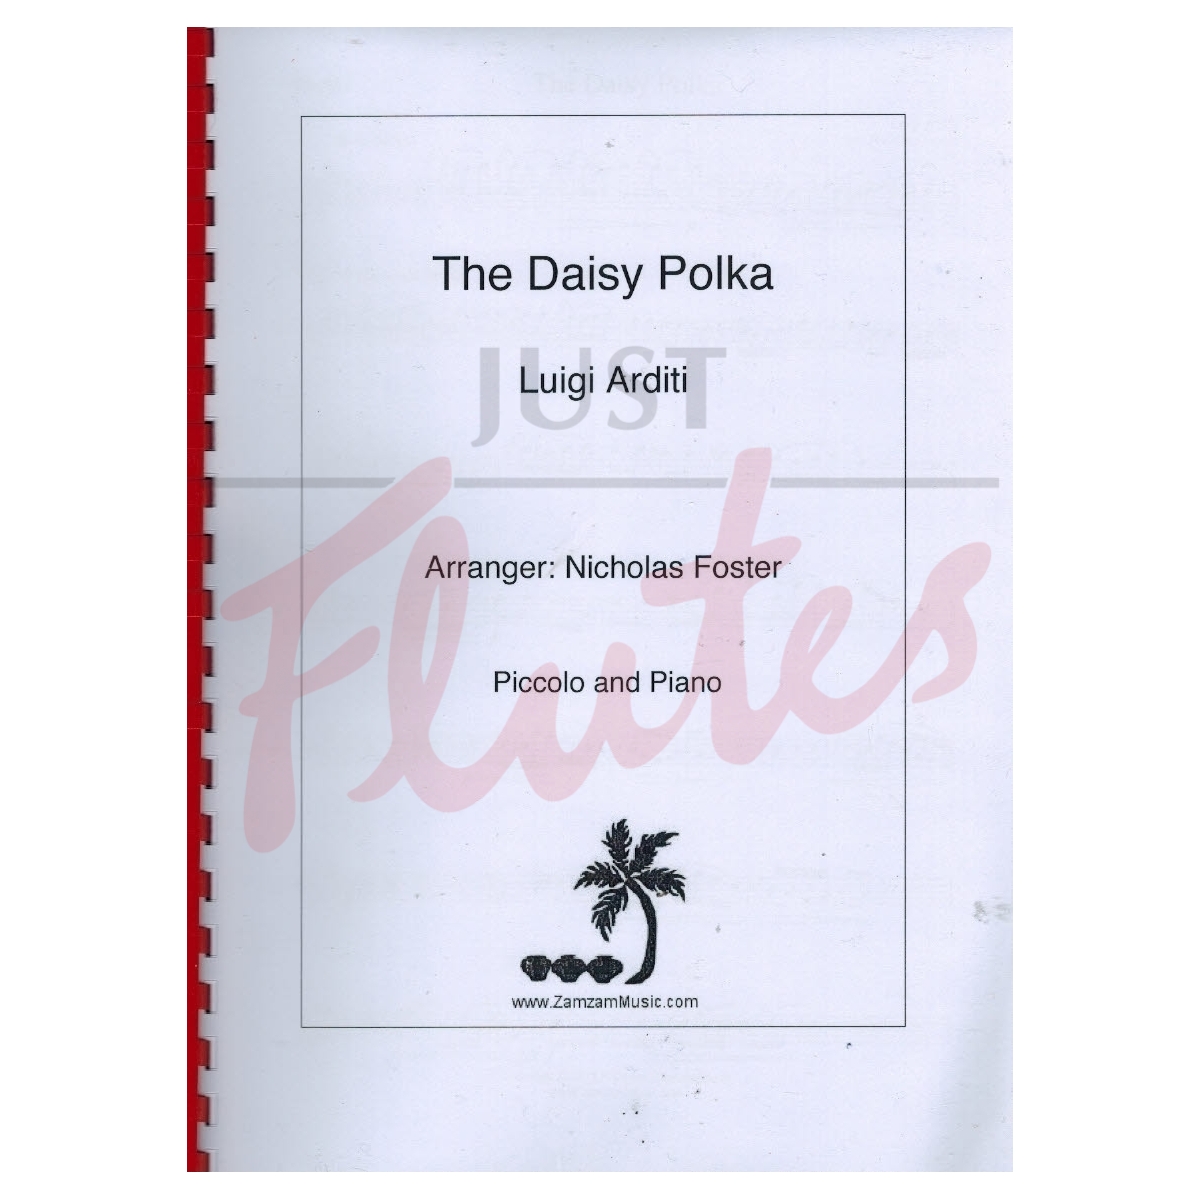 The Daisy Polka